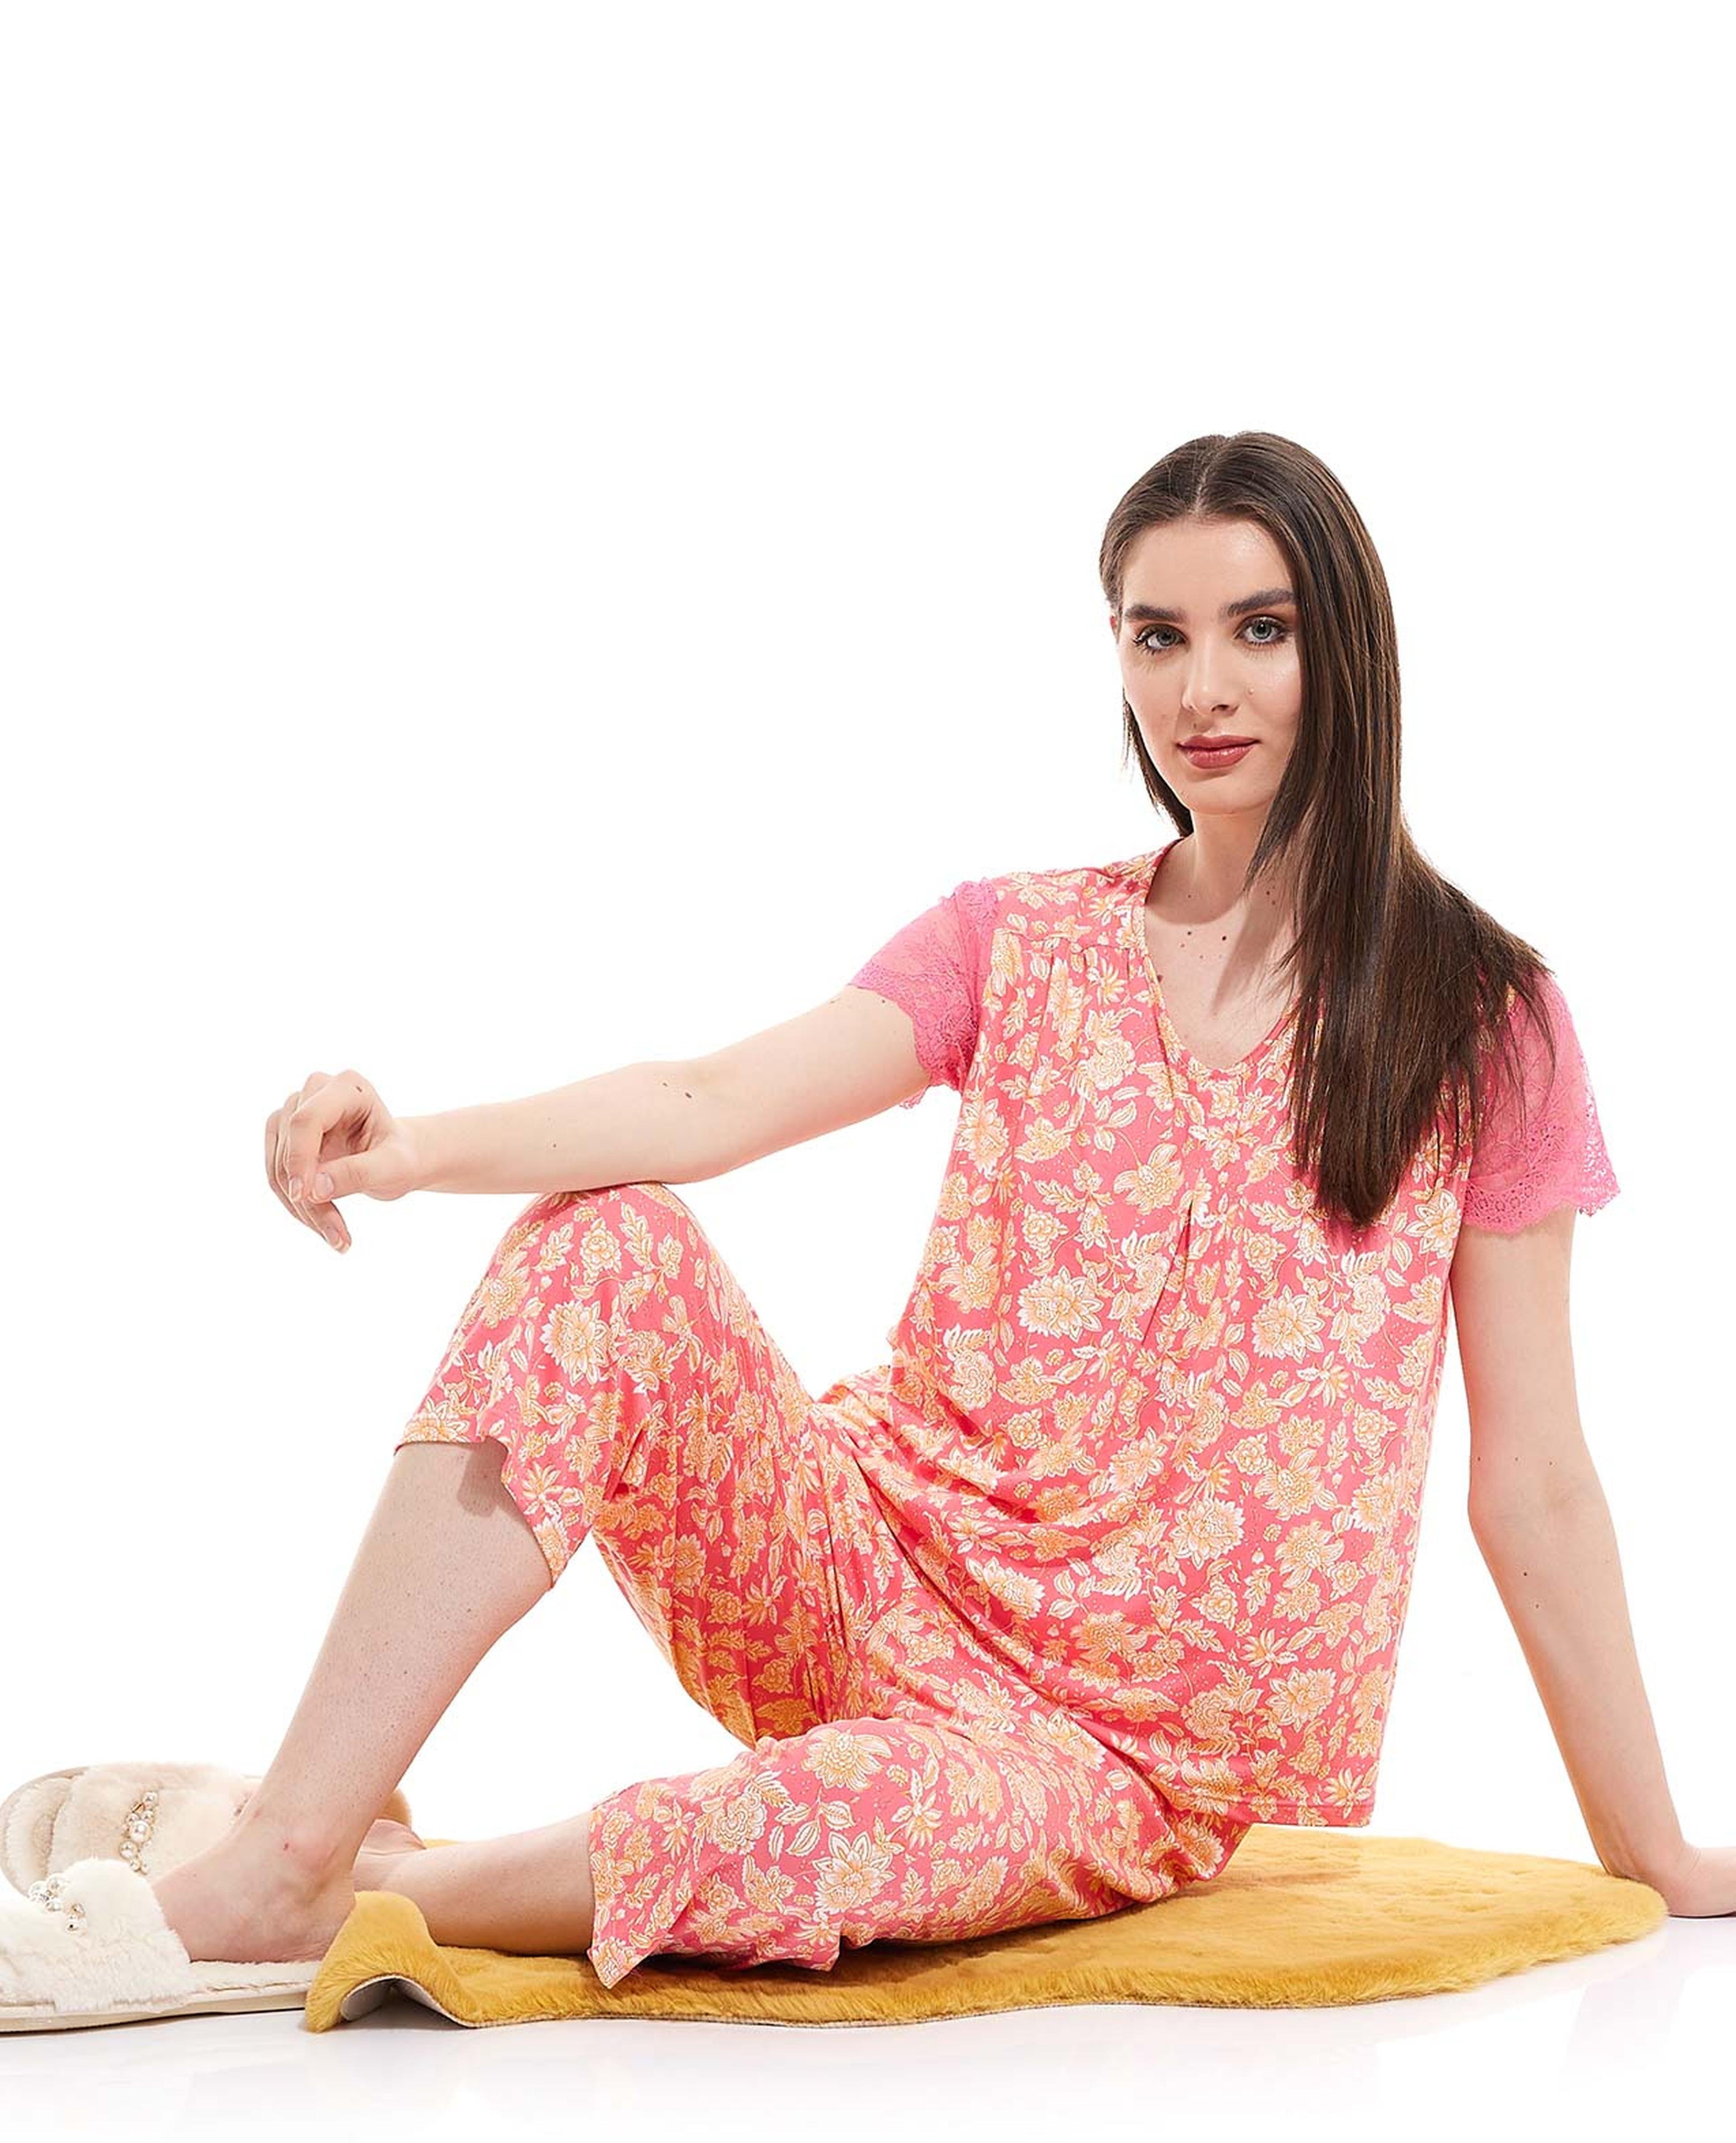 Floral Printed Capri Pajama Set with Lace Sleeves